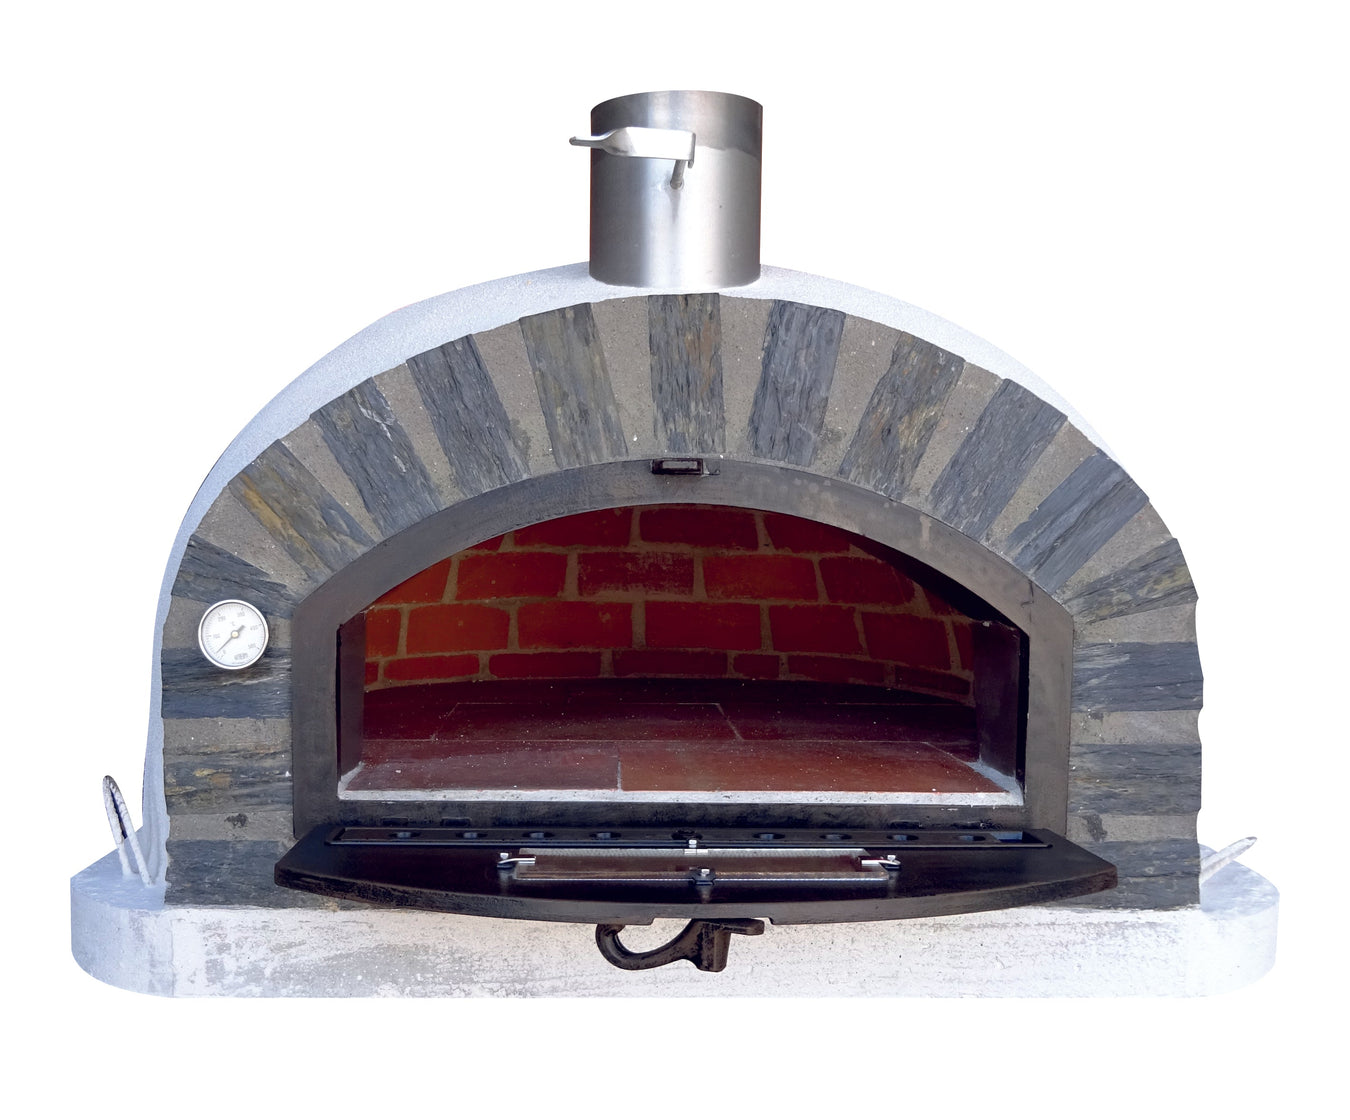 Authentic Pizza Ovens